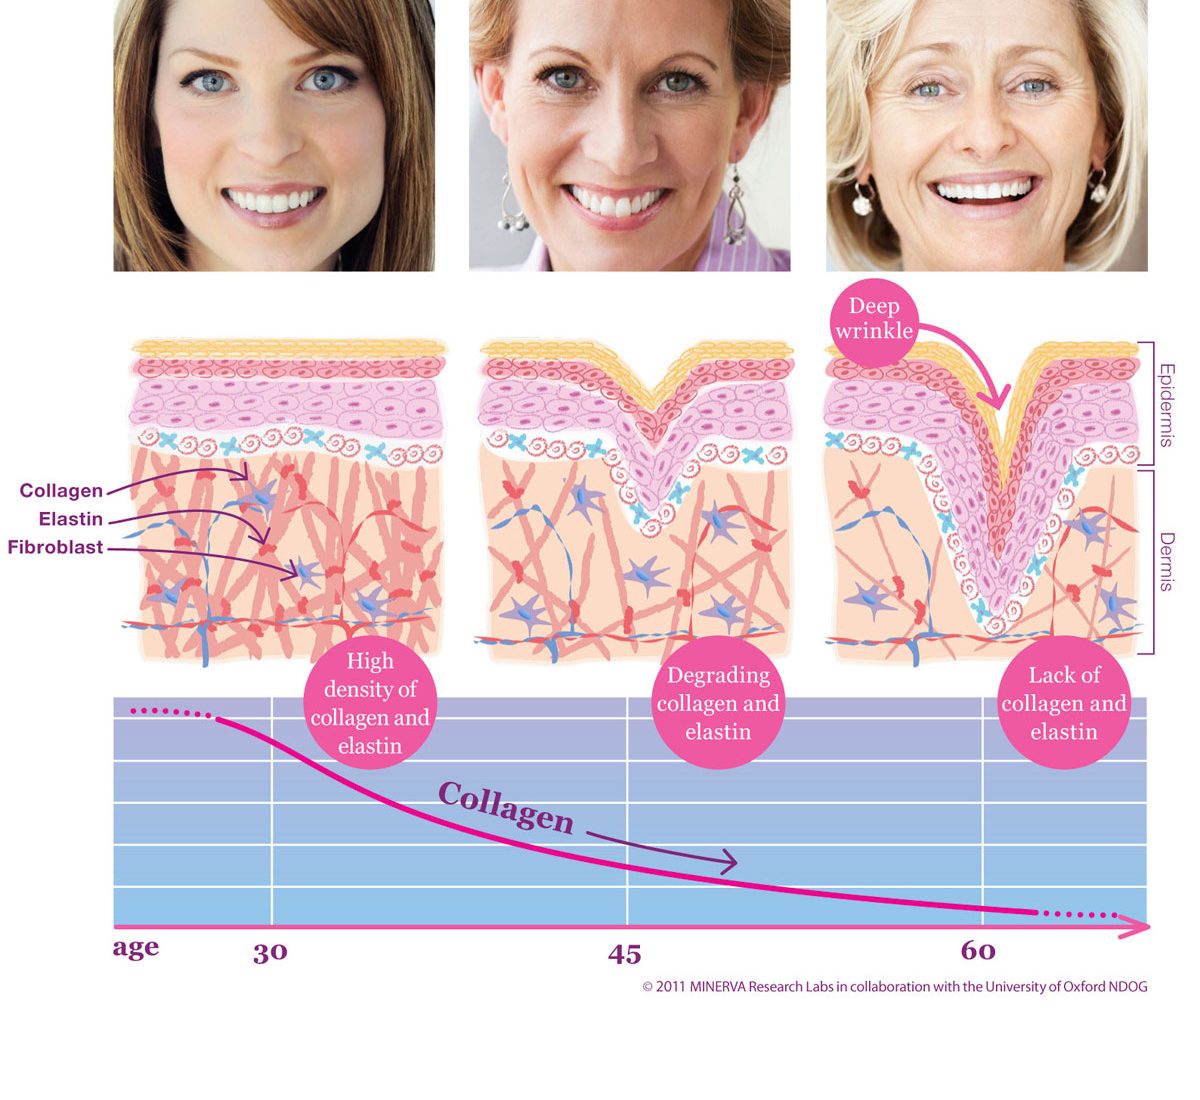 Aesthetic Science Skincare's EpiWave™ Ultrasonic Wrinkle RX branded treatment